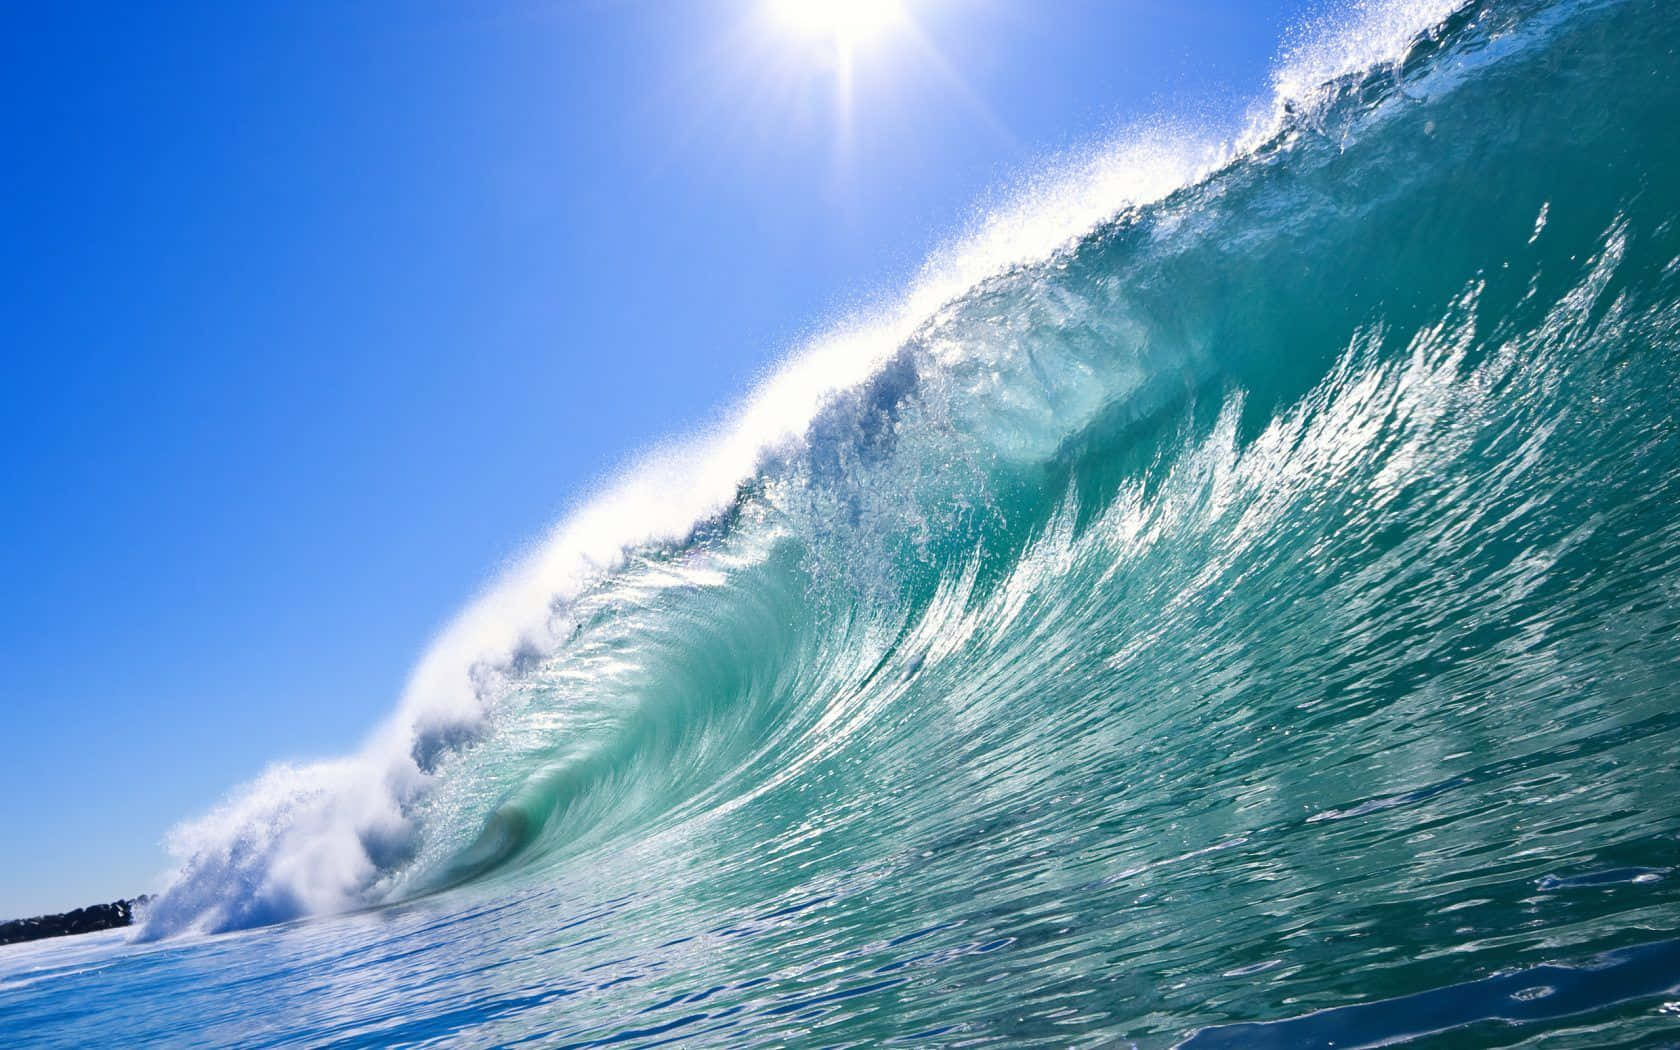 Powerful ocean waves crashing on the shore